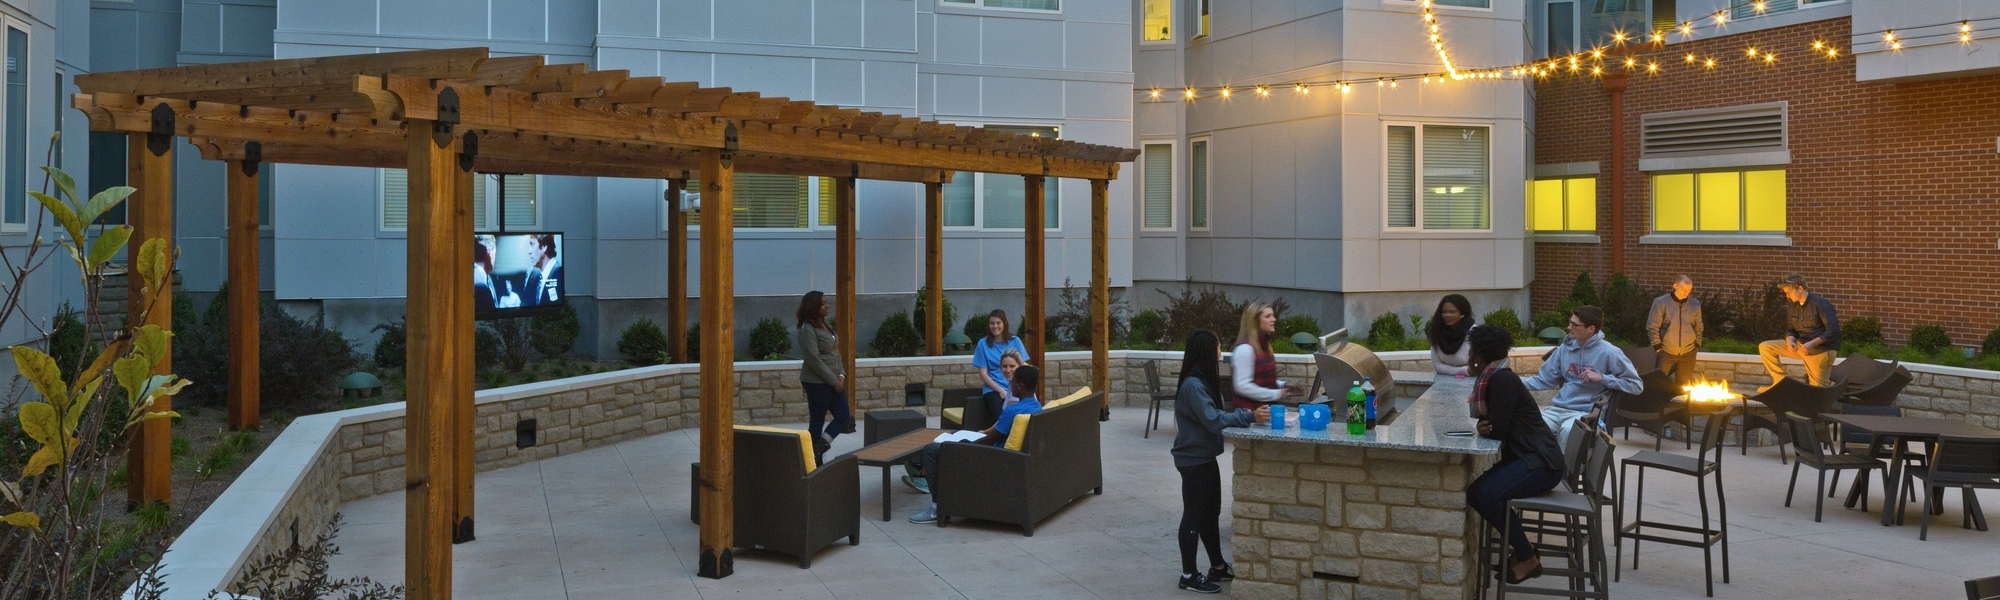 The Verge Student Housing University of Cincinnati Courtyard